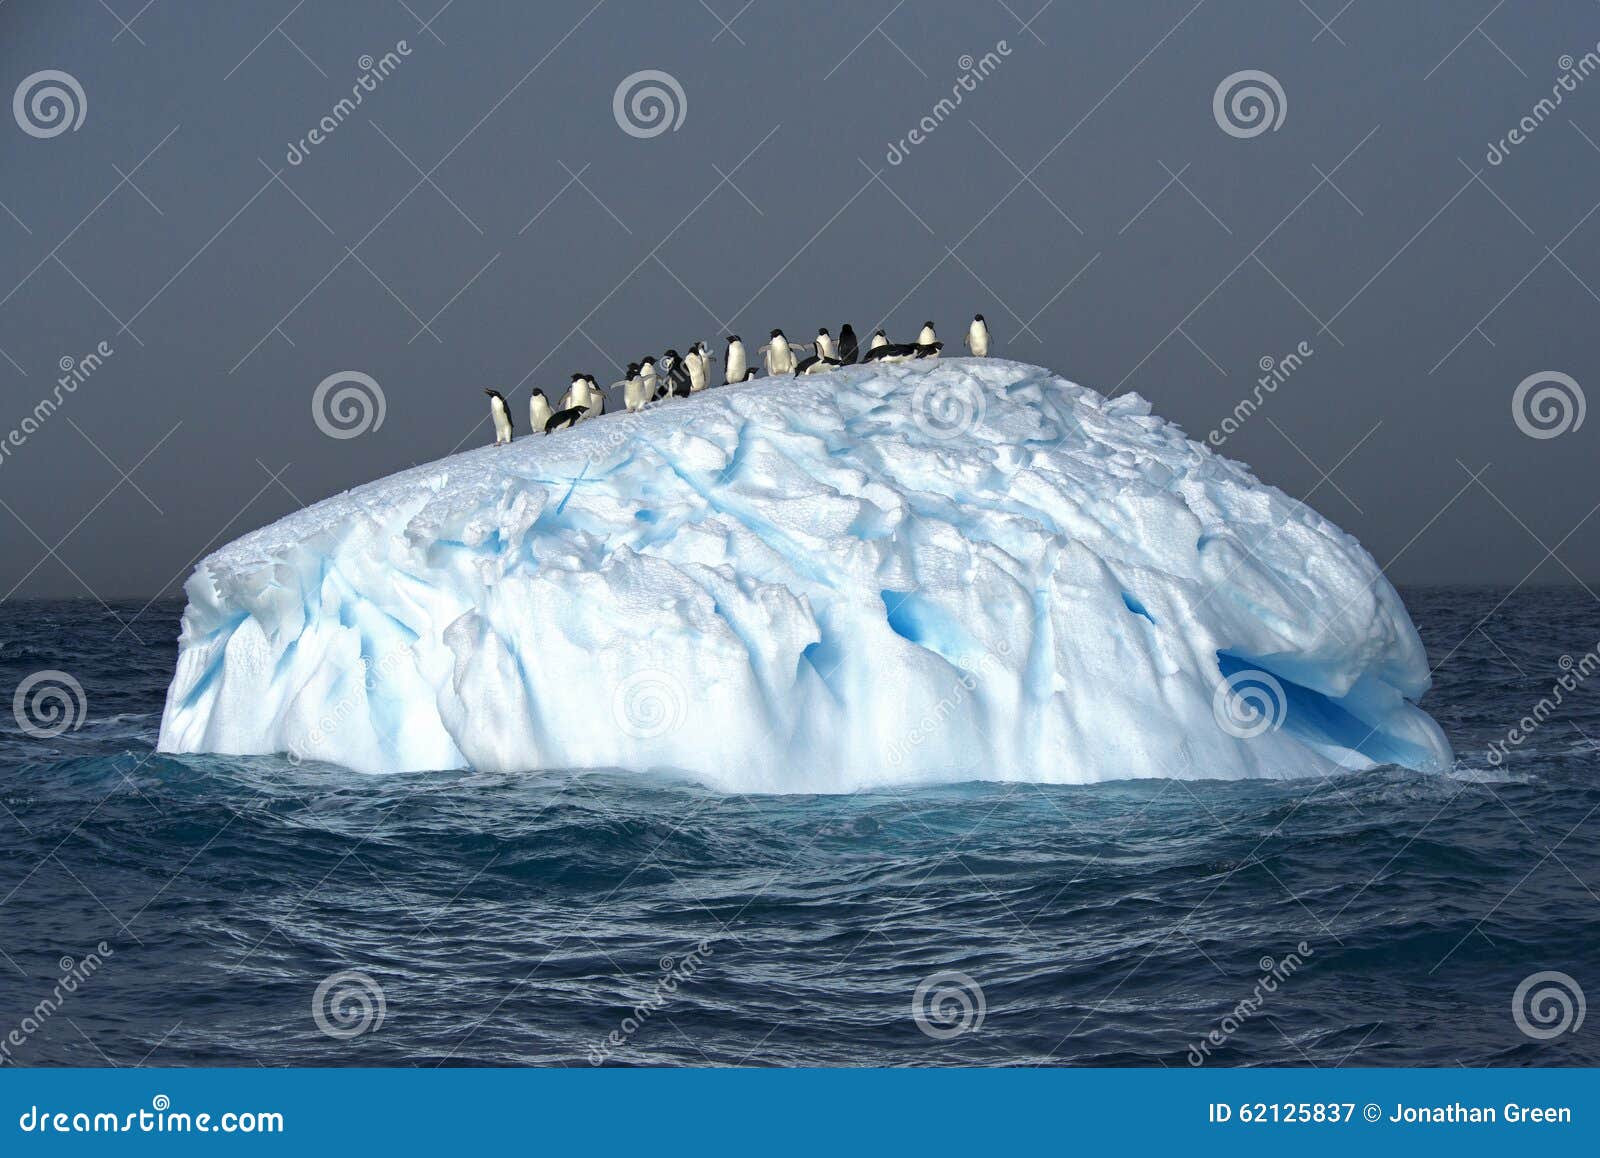 adelie penguins on an iceberg, weddell sea, anarctica